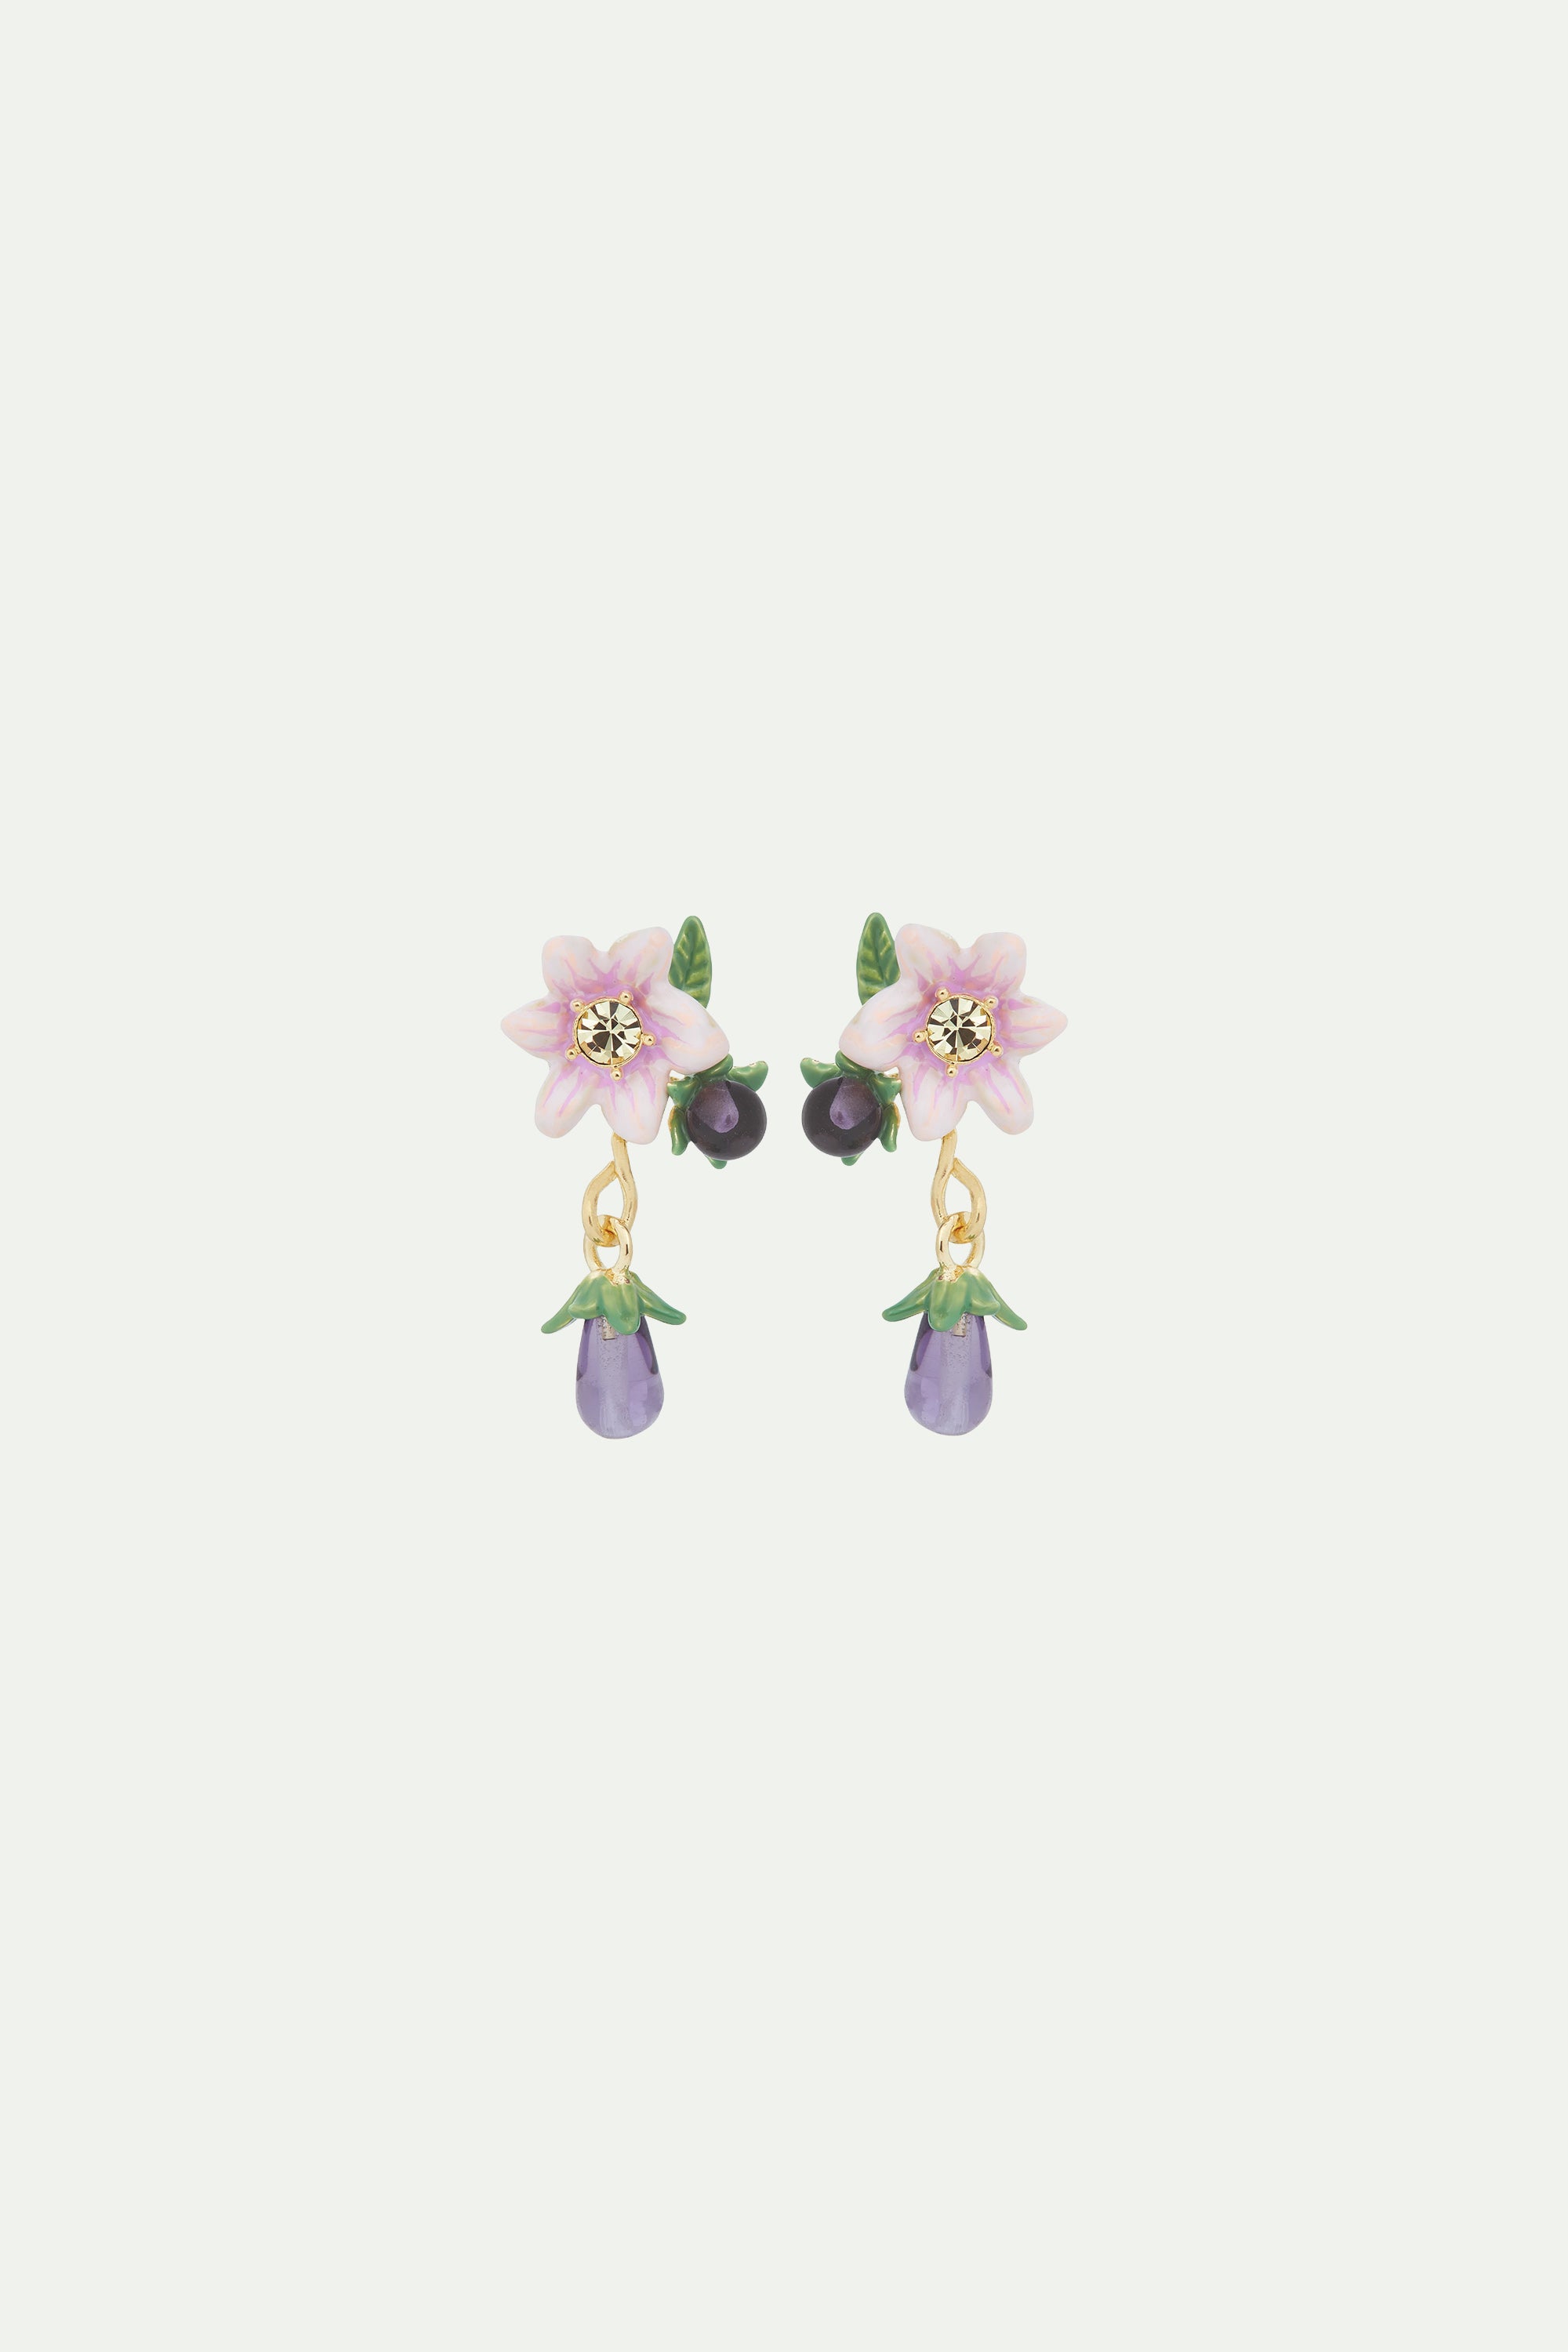 Aubergine and flower post earrings